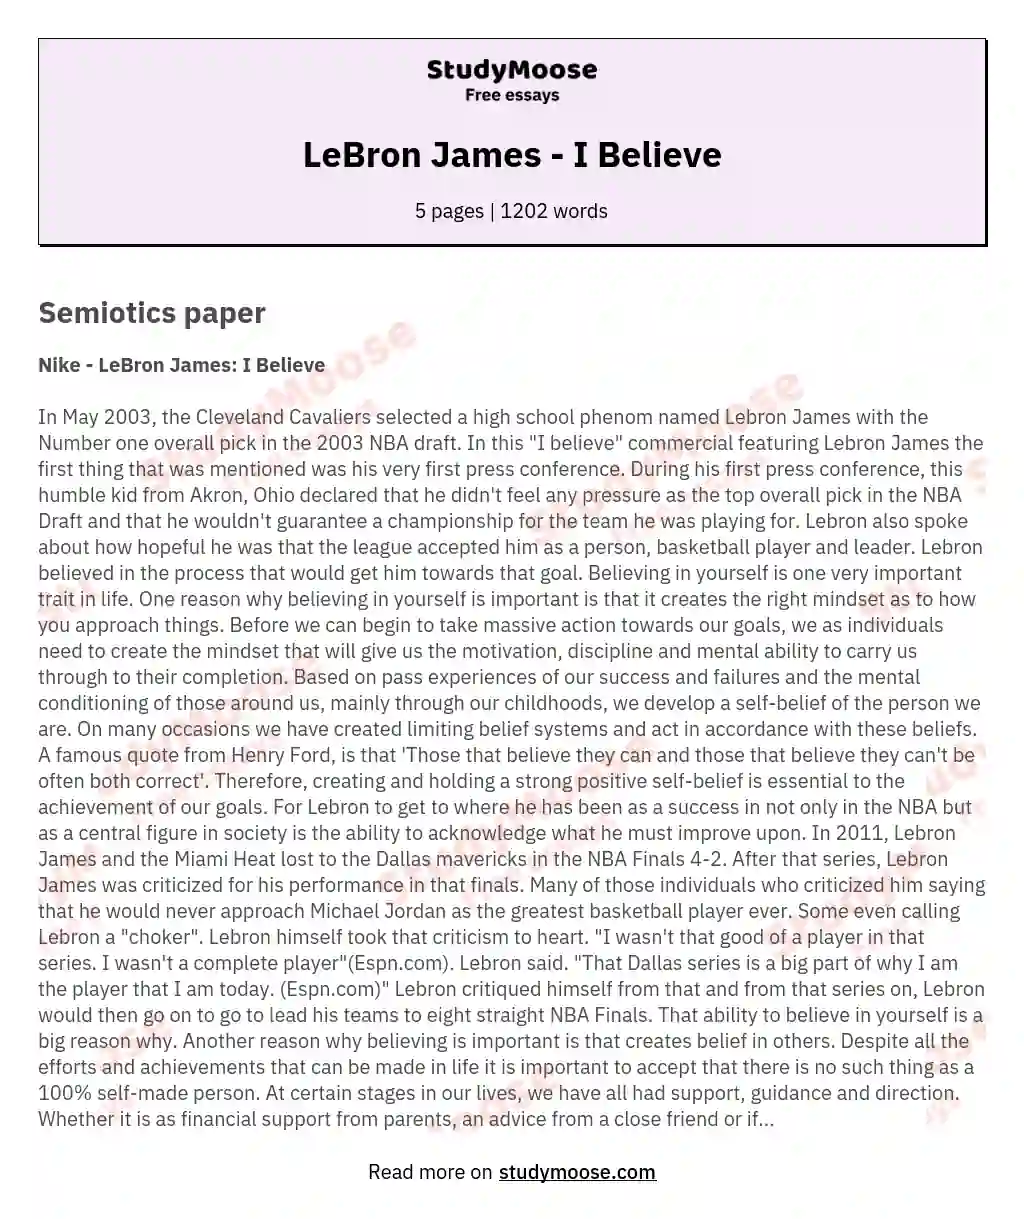 LeBron James - I Believe essay